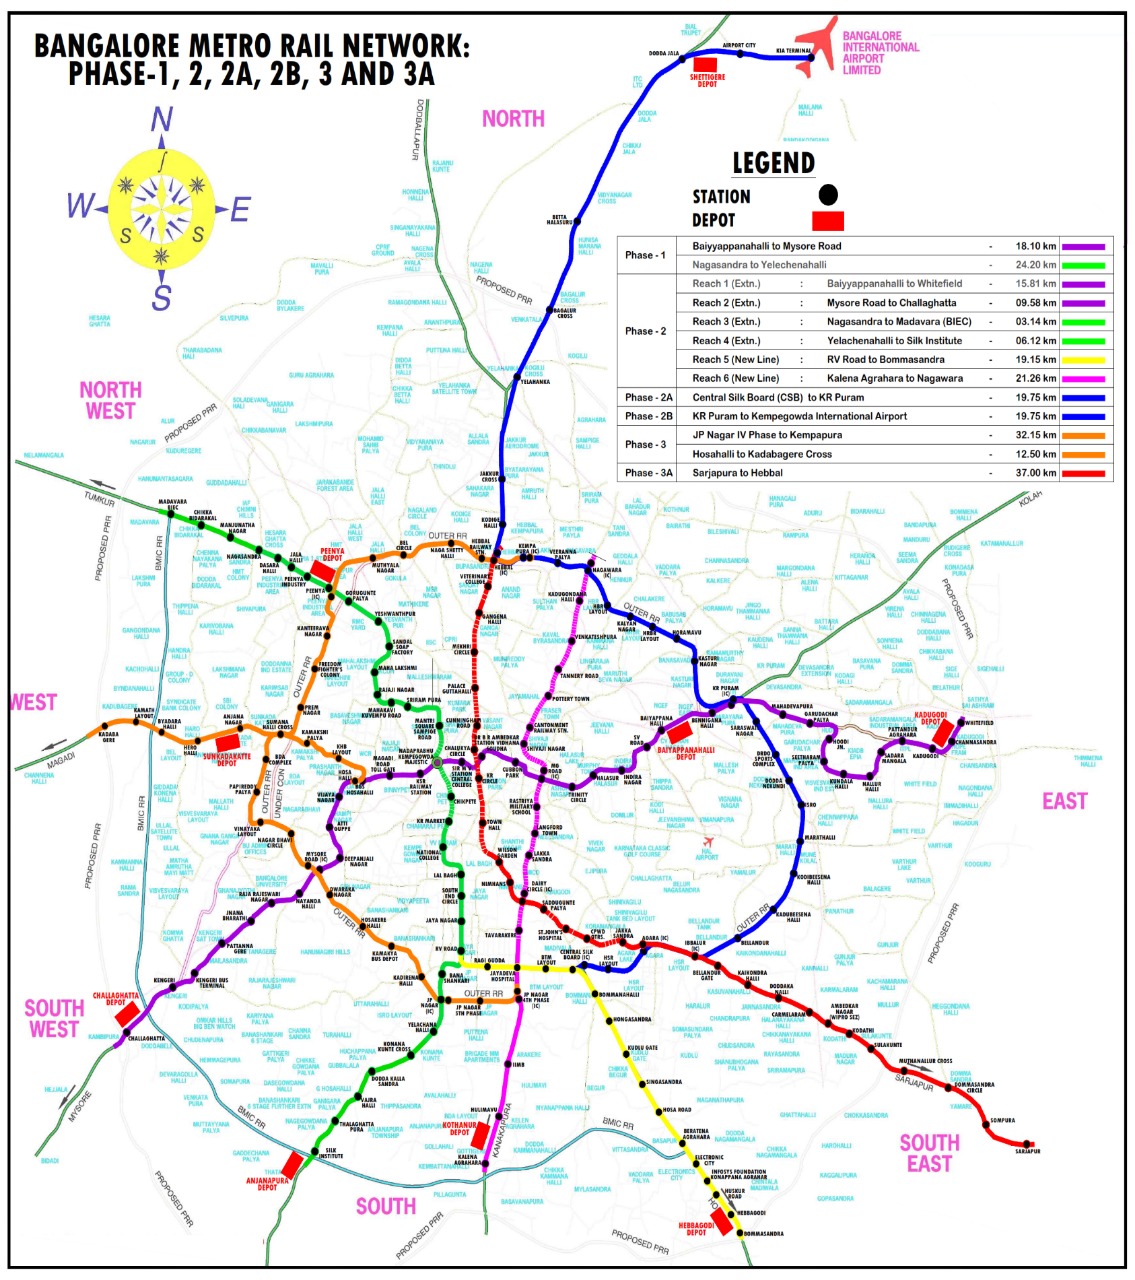 Bangalore Metro Orange line: Complete details here